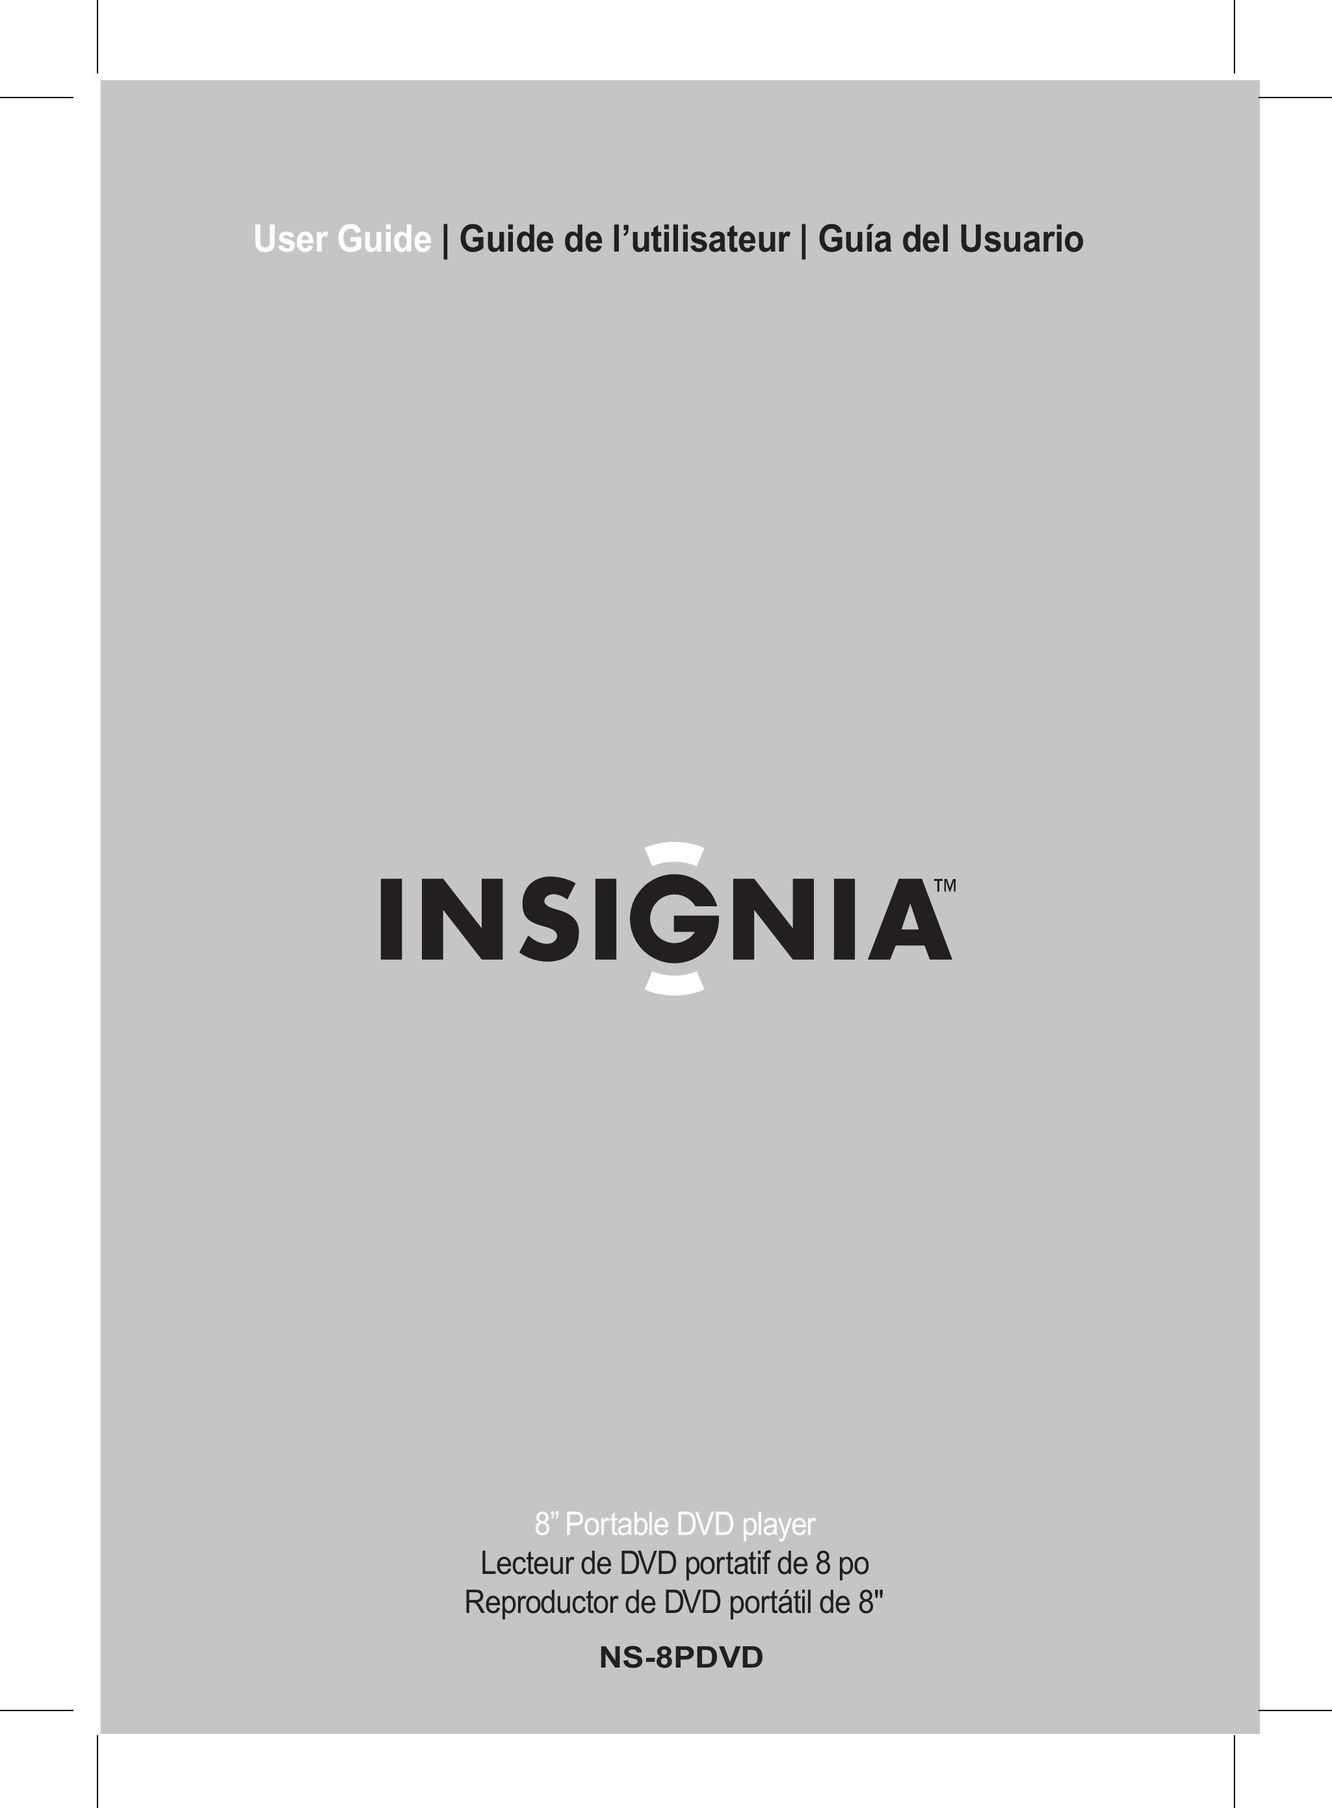 Insignia NS-8PDVD DVD Player User Manual